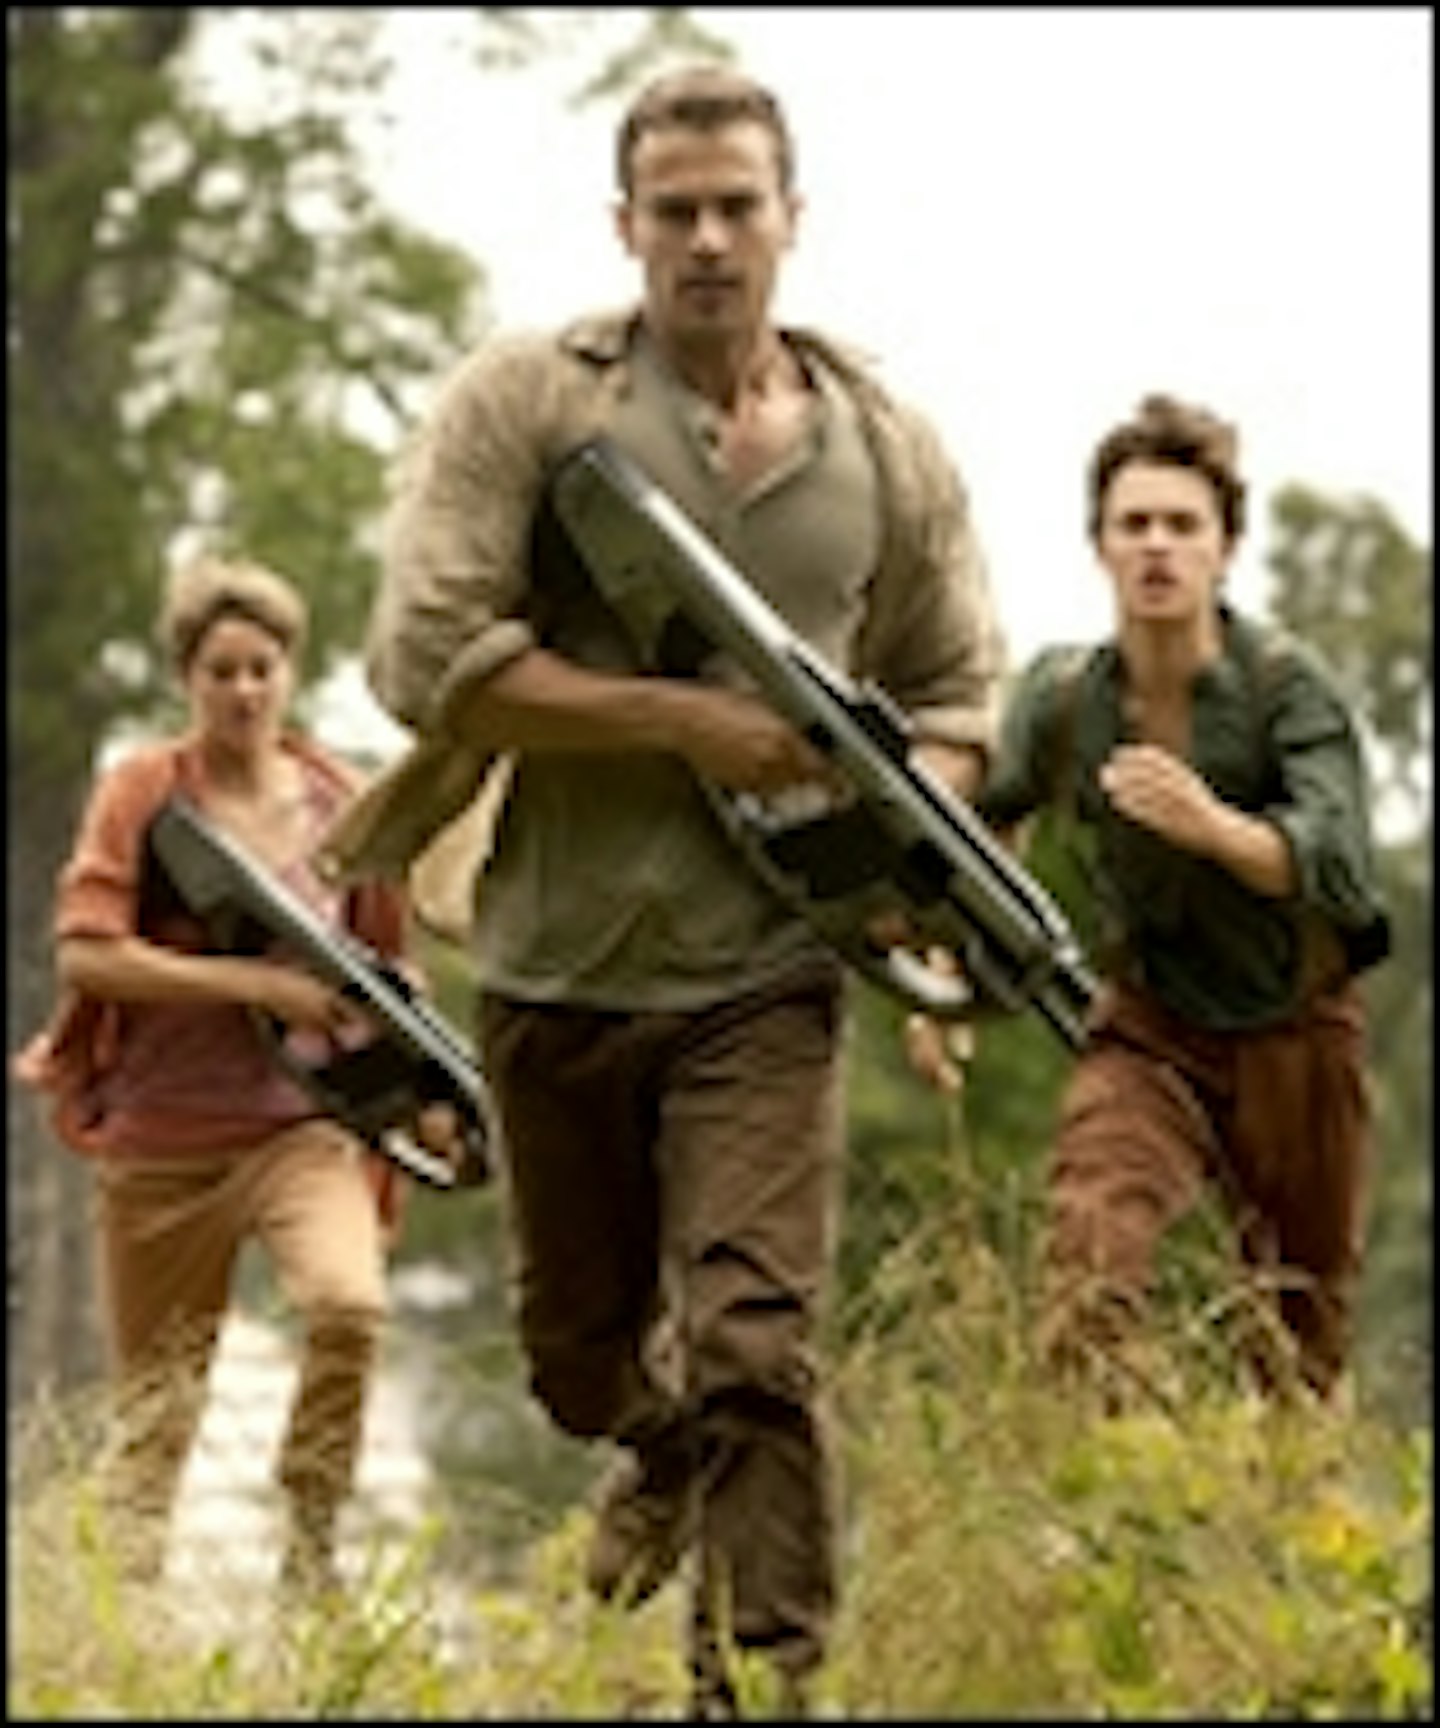 New Insurgent Trailer Lands Online